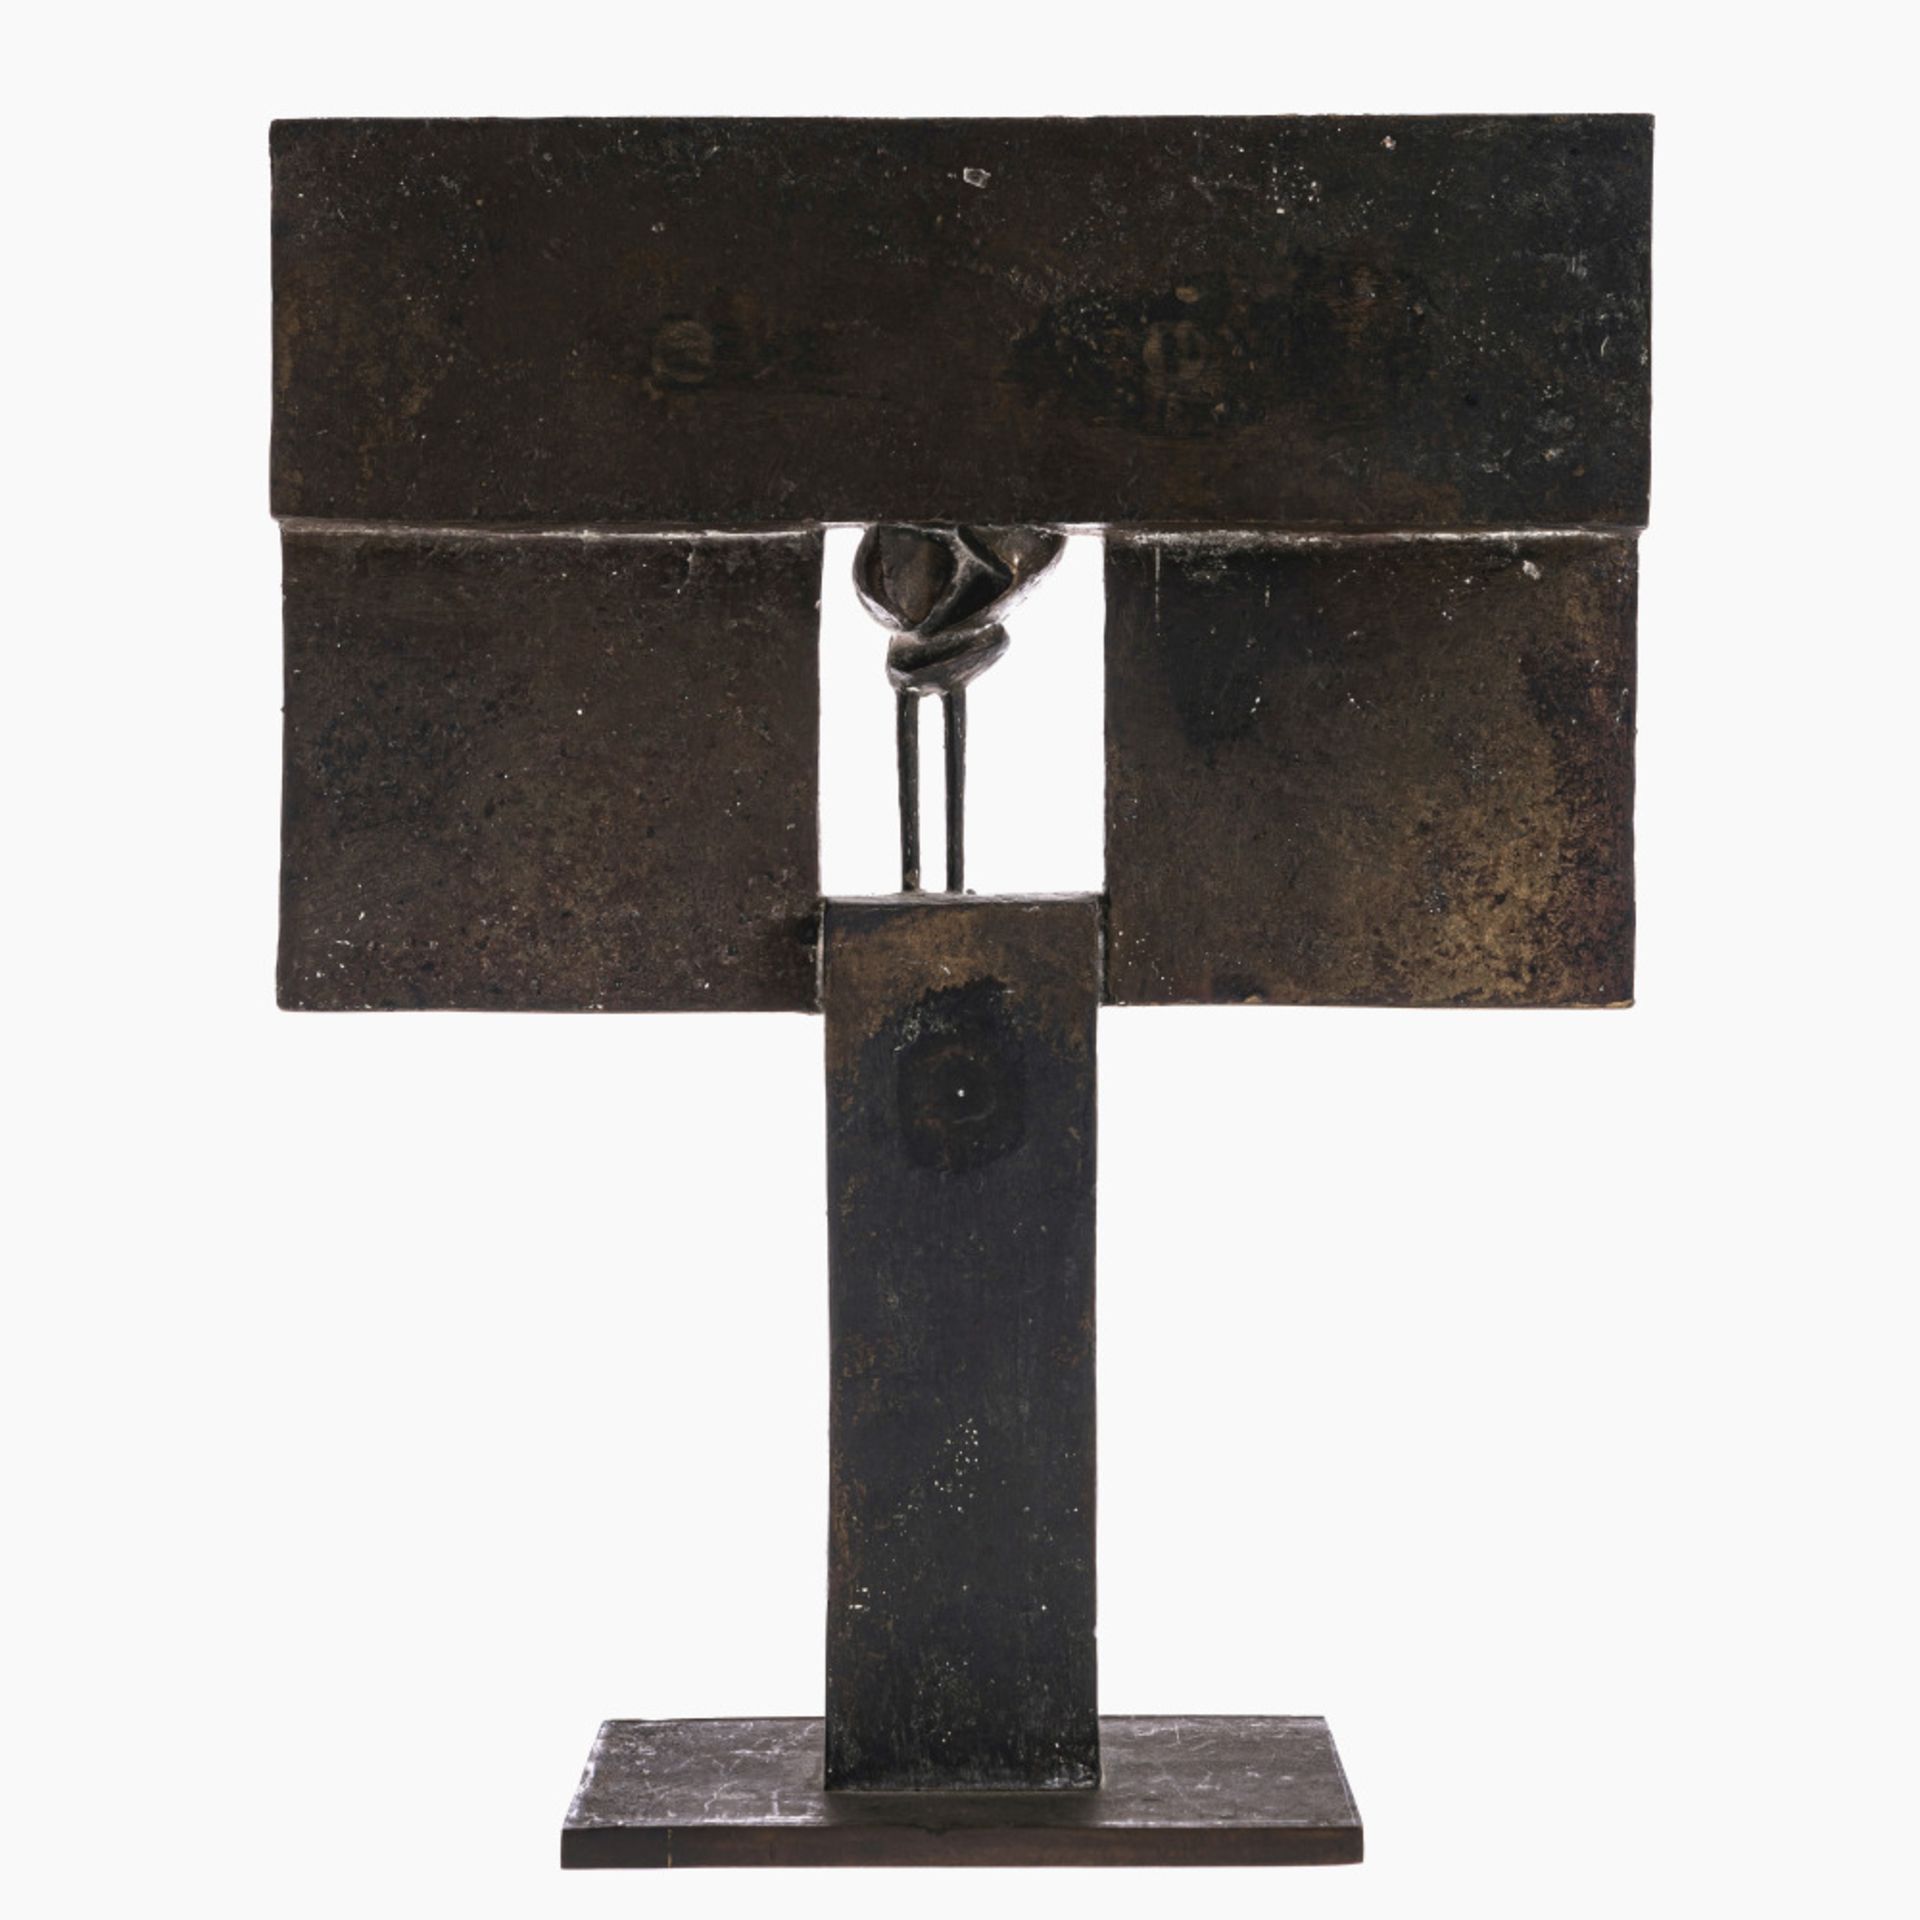 Fritz Koenig - Small votive offering. 1968 - Image 2 of 3